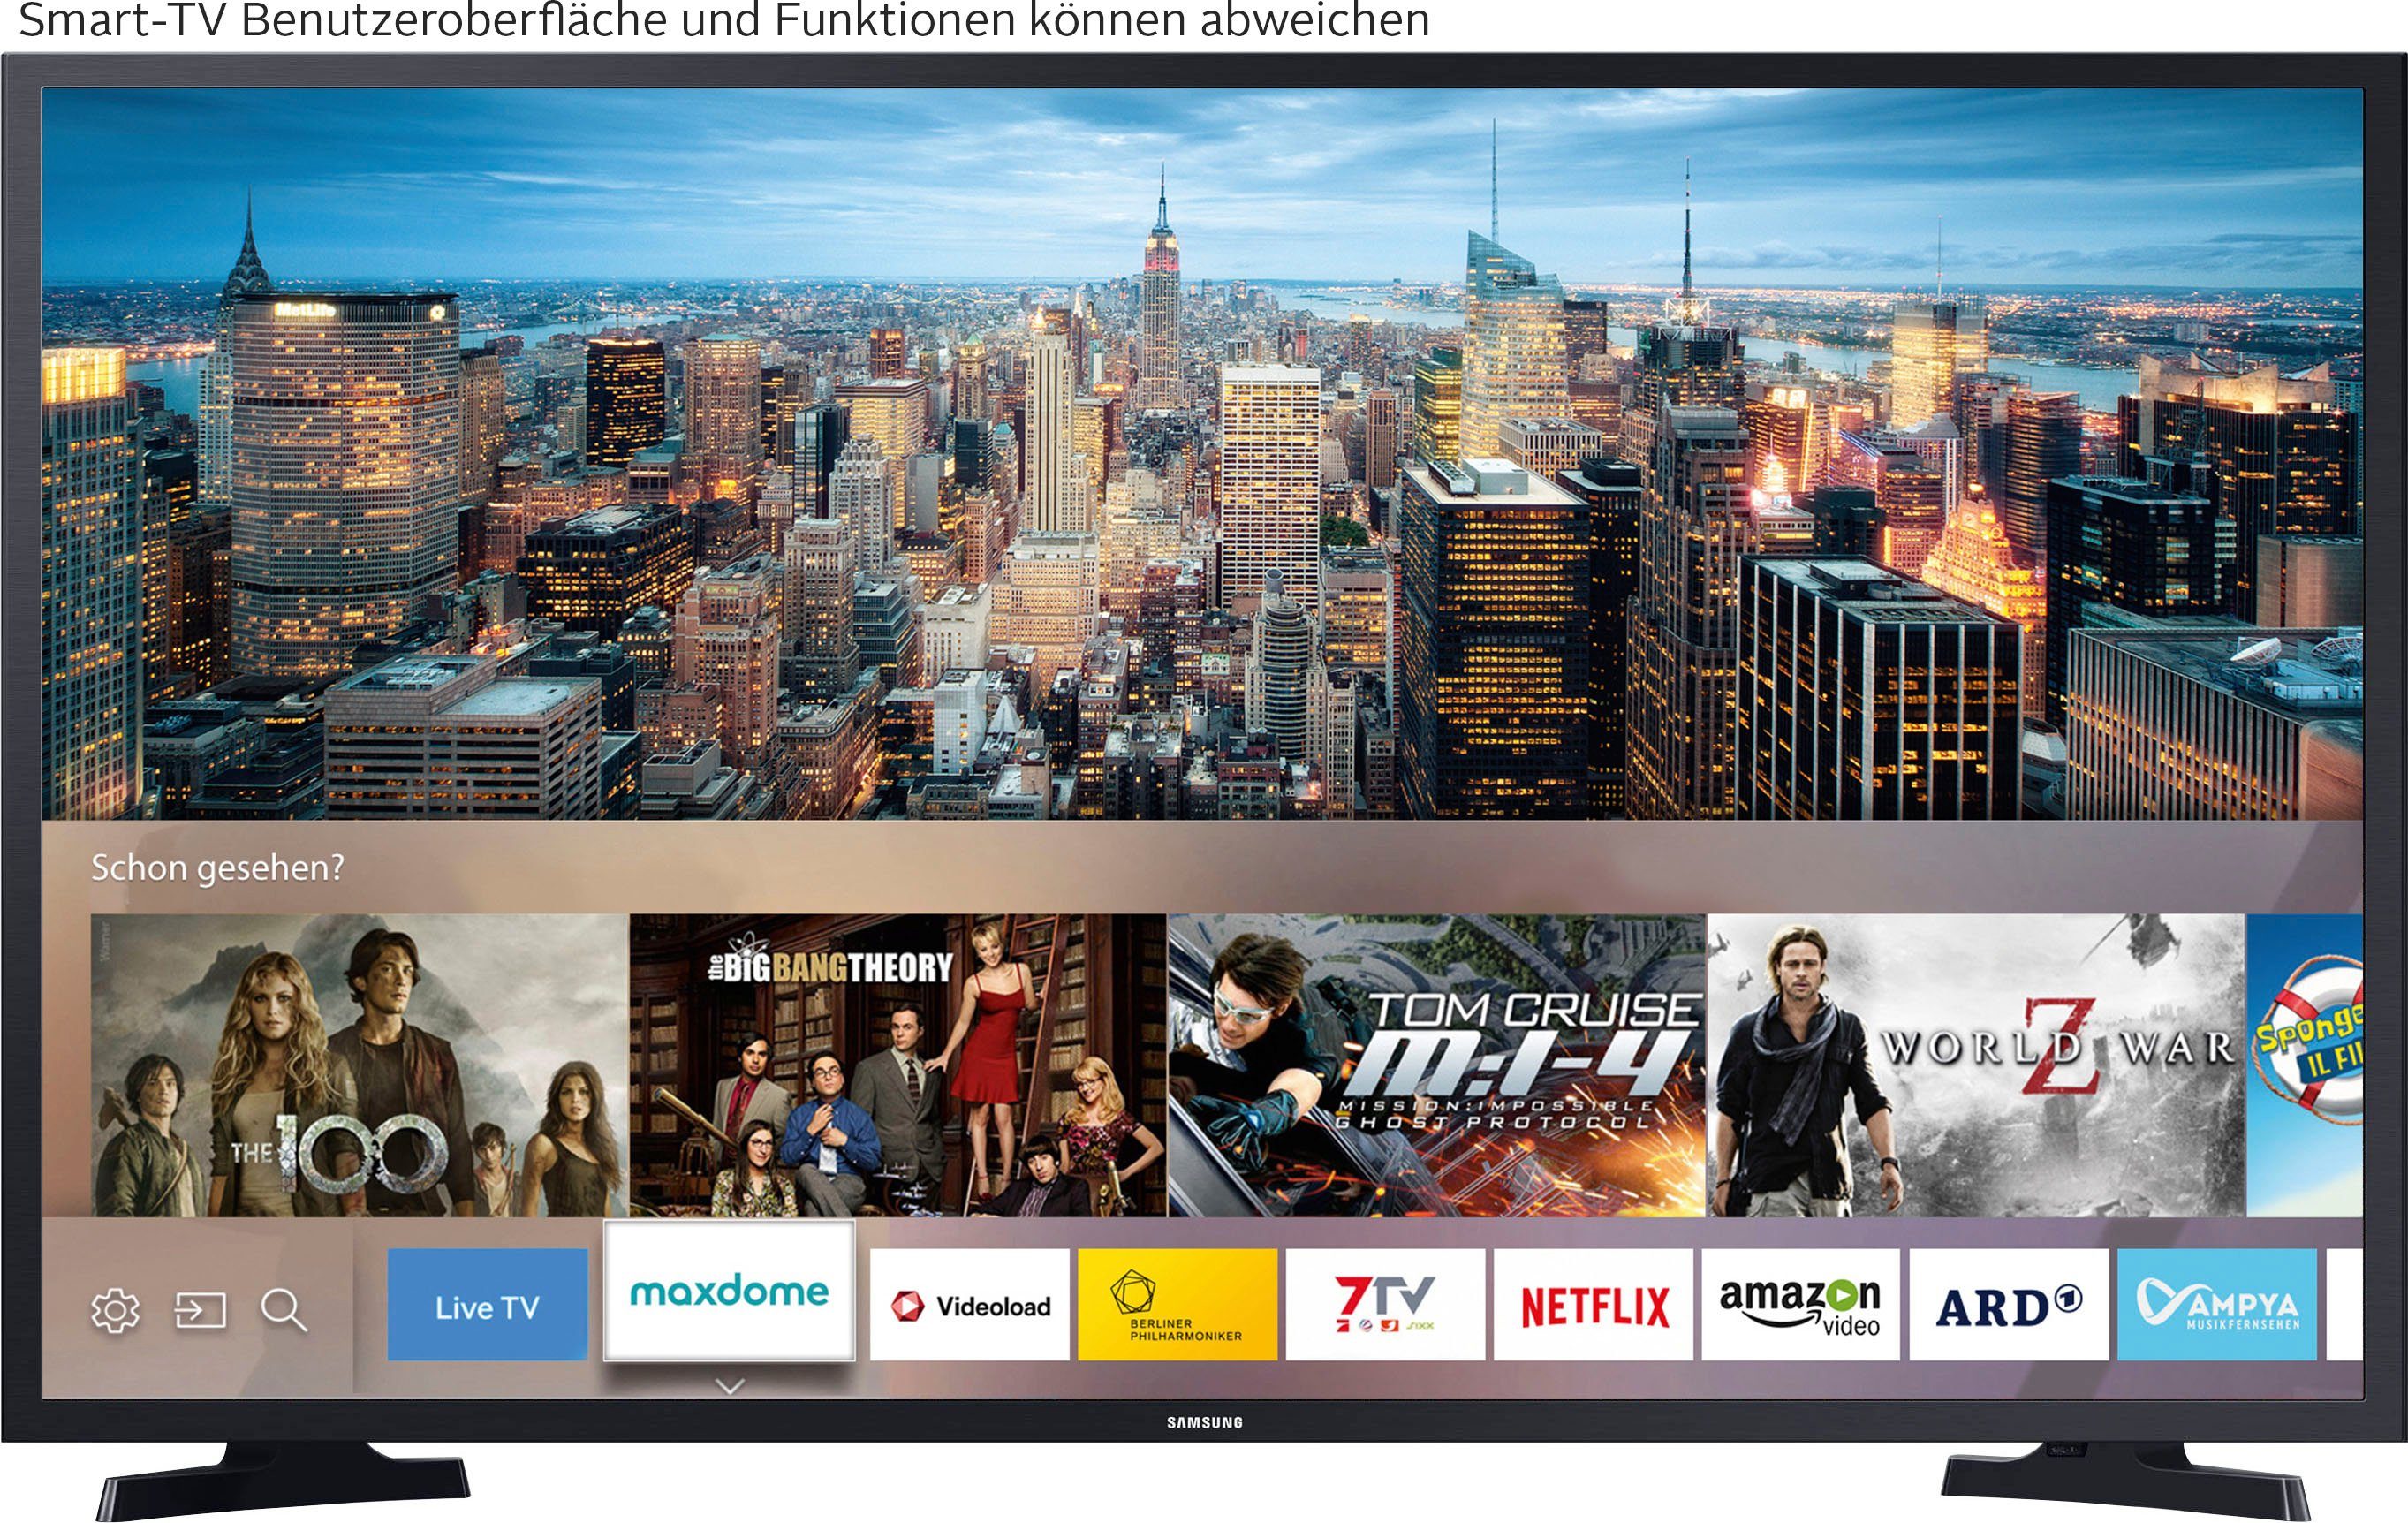 cm/32 PurColor,HDR,Contrast GU32T5379CD Samsung Smart-TV, Zoll, Enhancer) LED-Fernseher (80